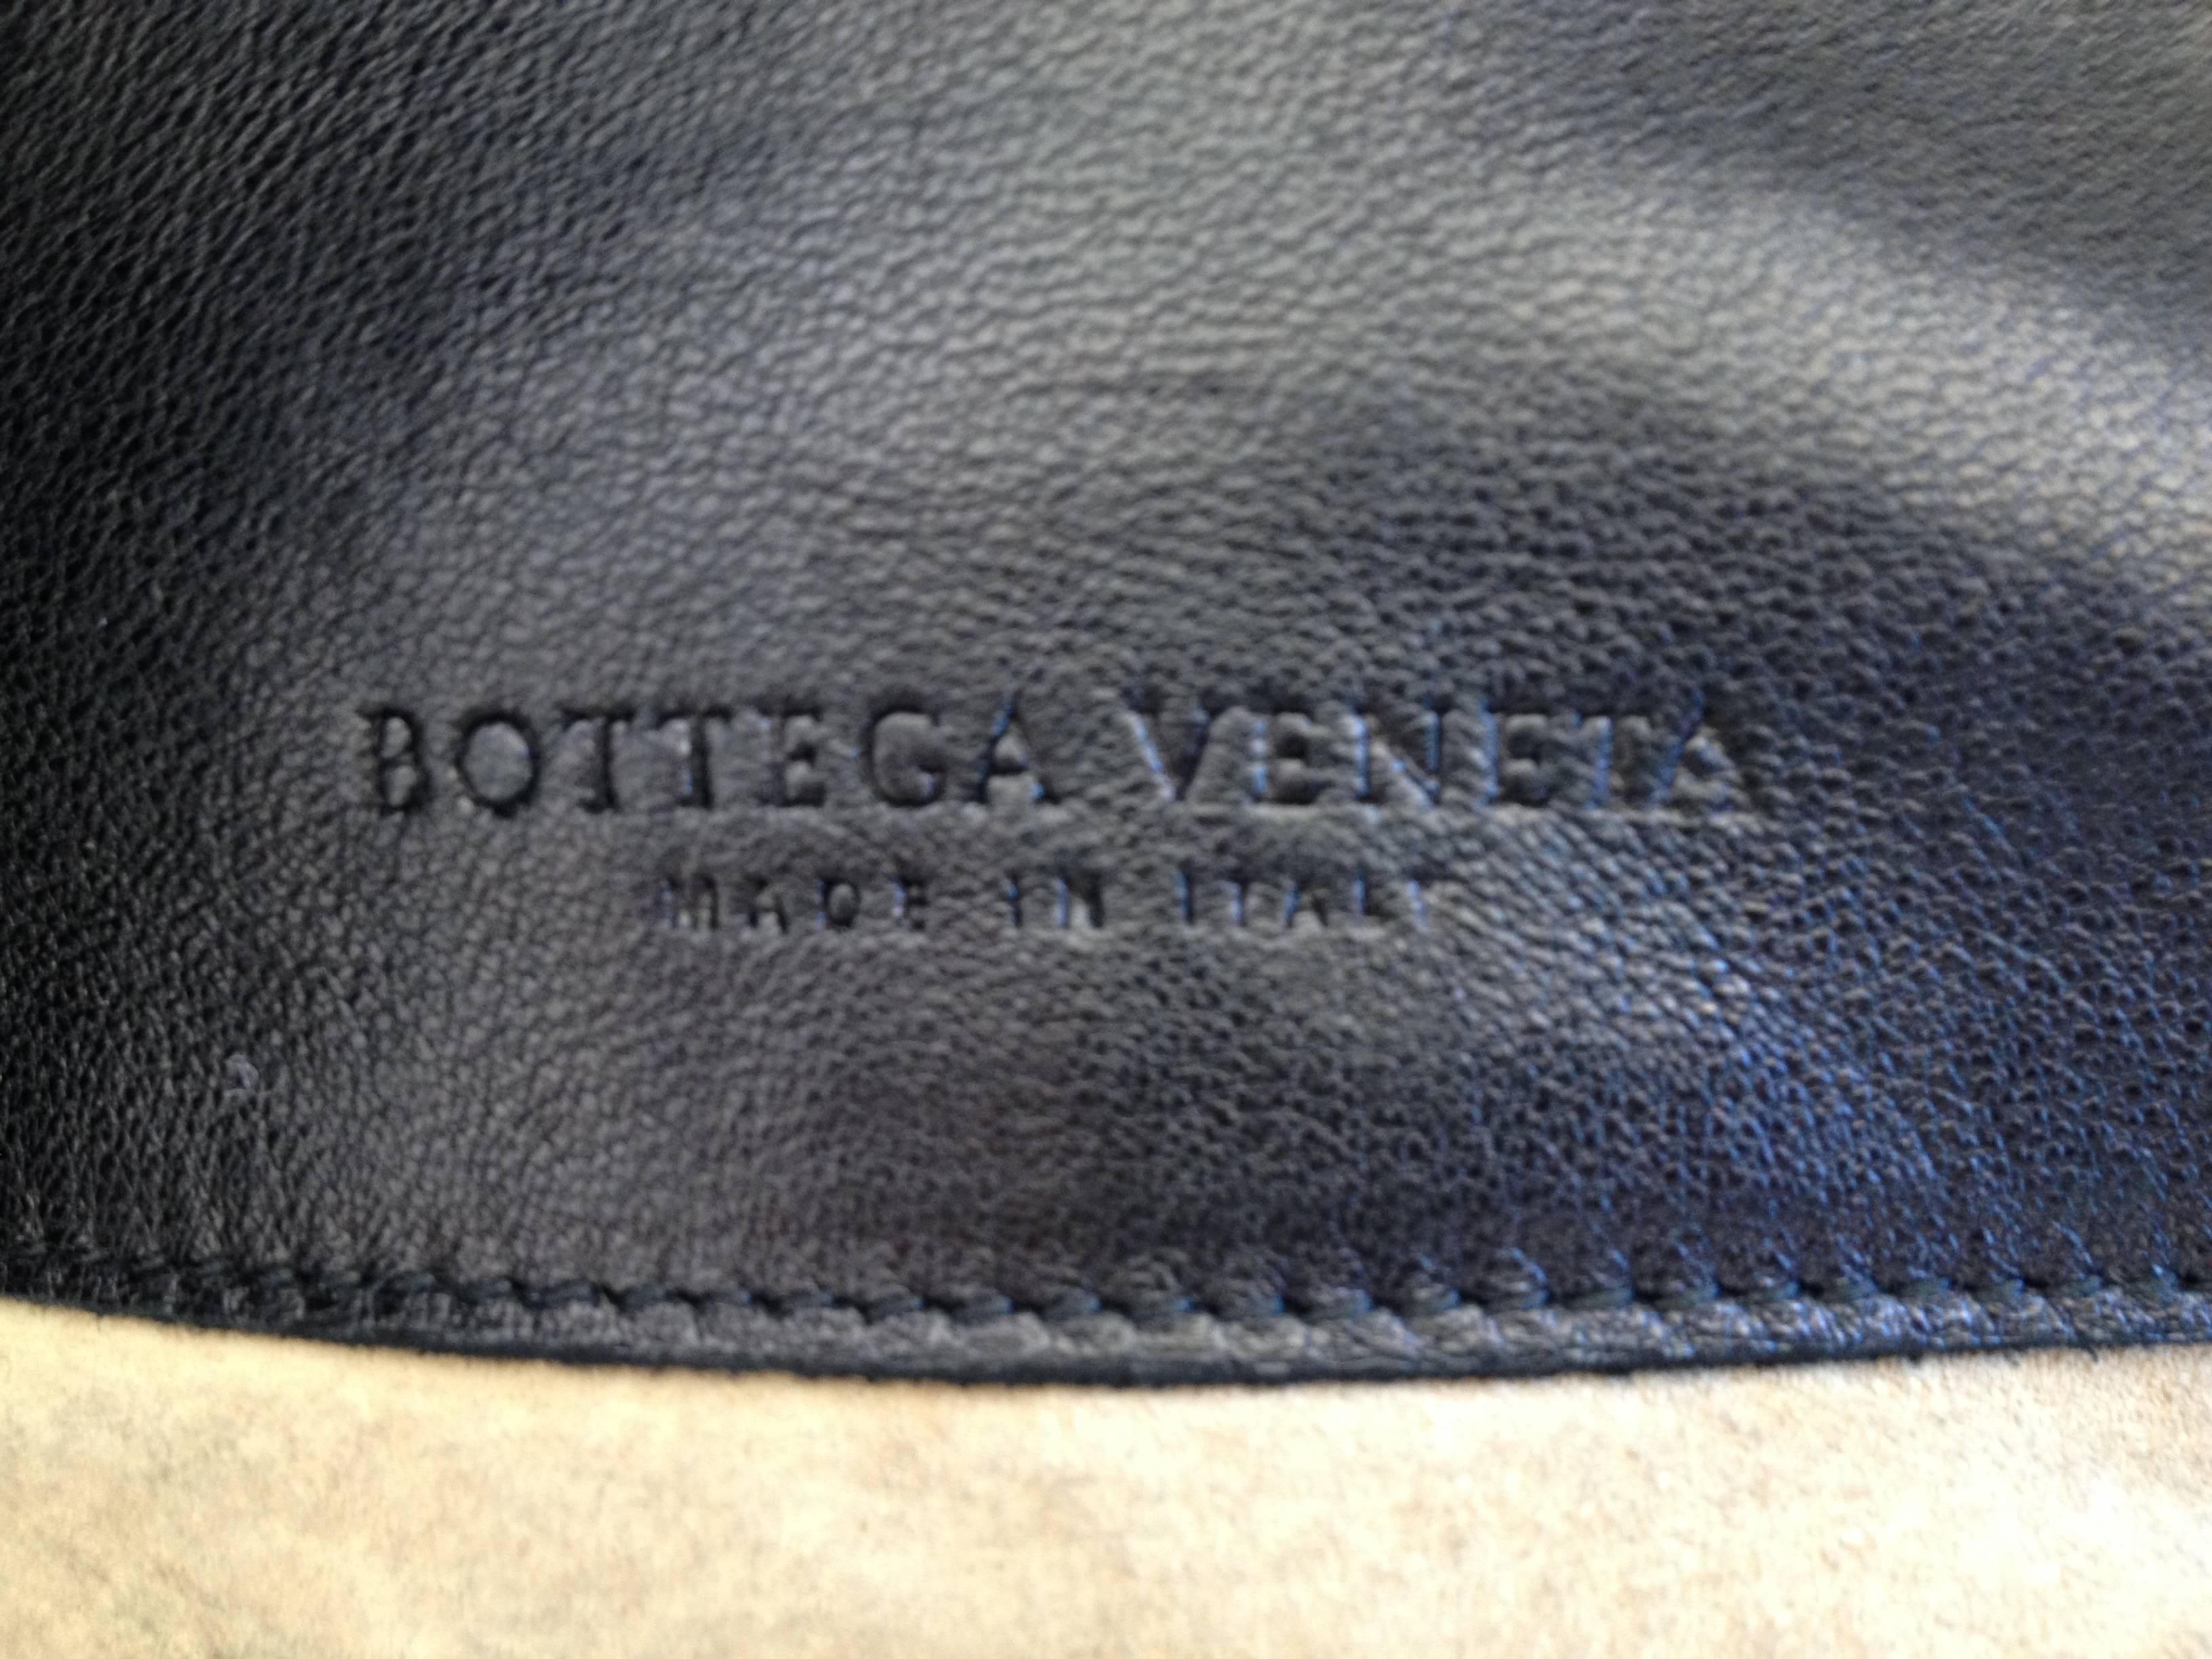 Bottega Veneta Black Leather Hobo Bag With Intracciato Details 6